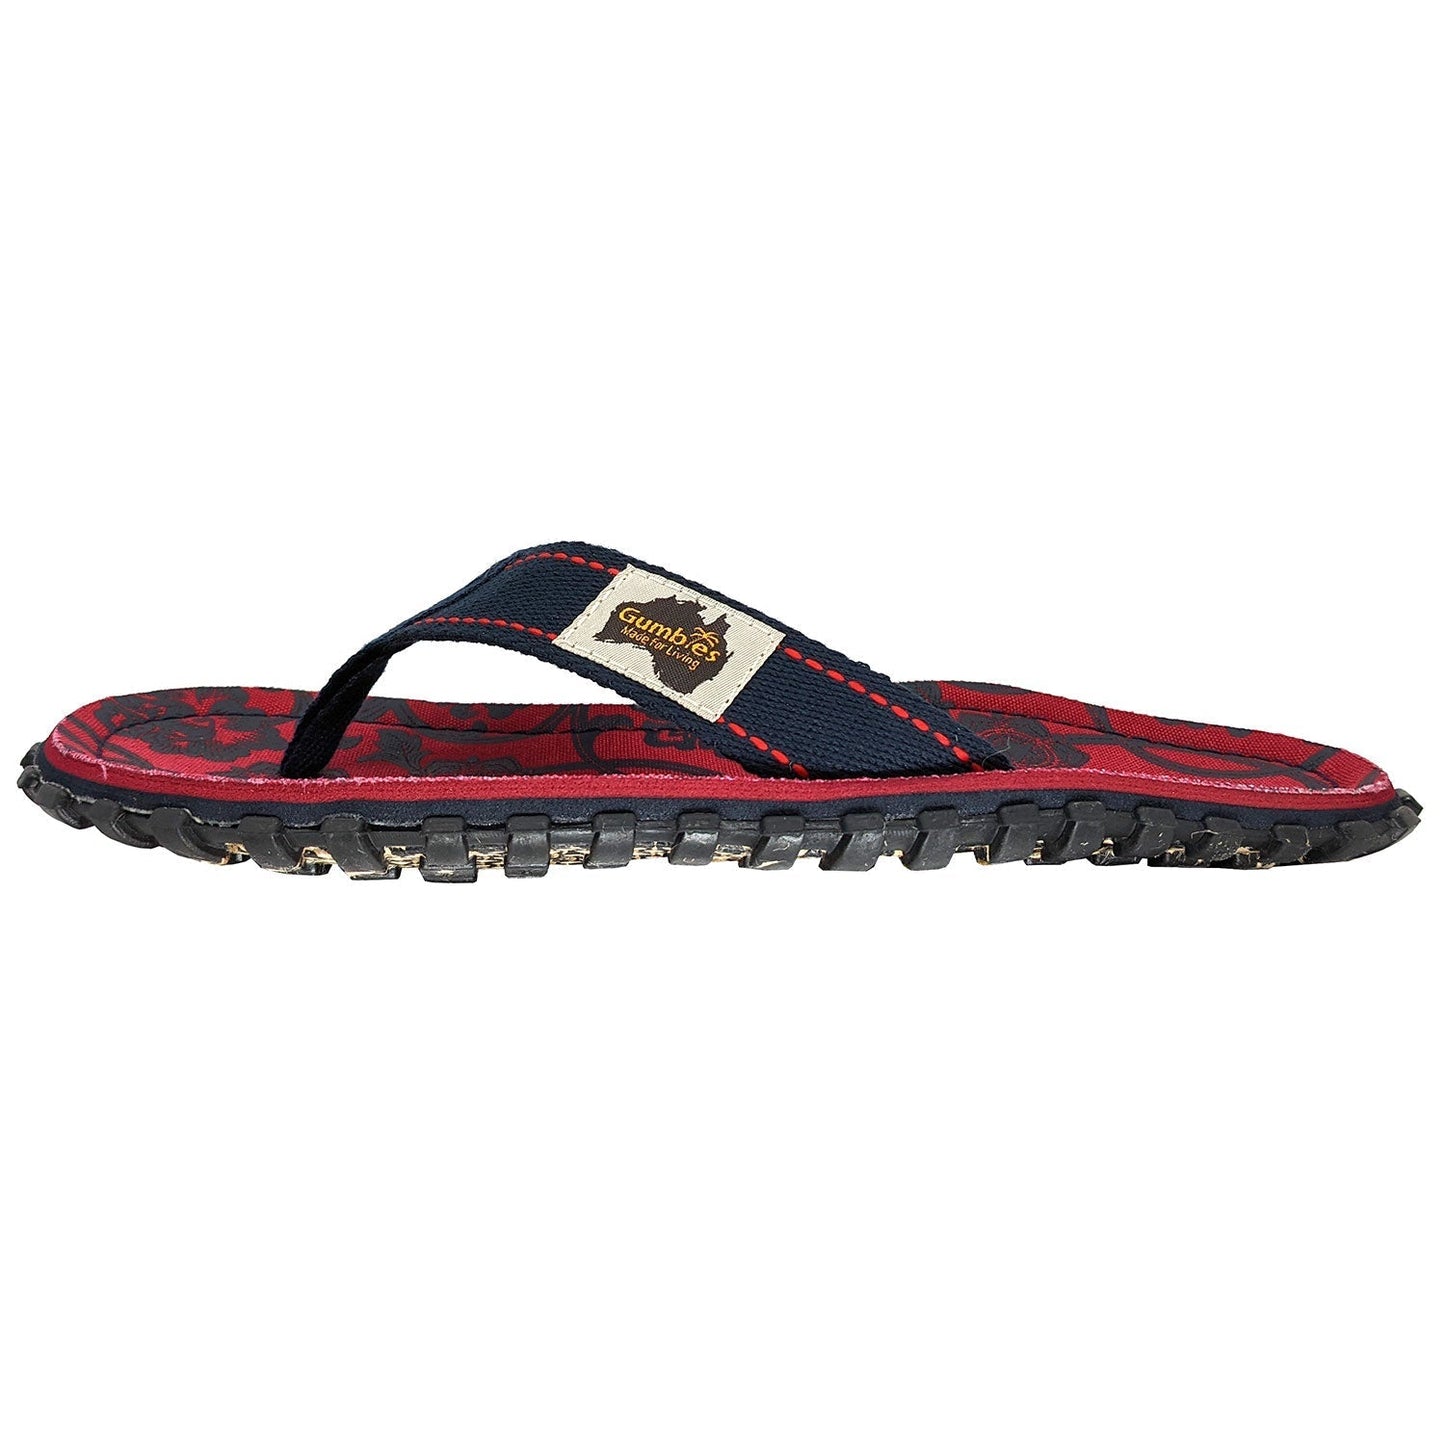 Gumbies Islander Flip-Flops - Men's - Red & Blue Rose - Angler's Pro Tackle & Outdoors